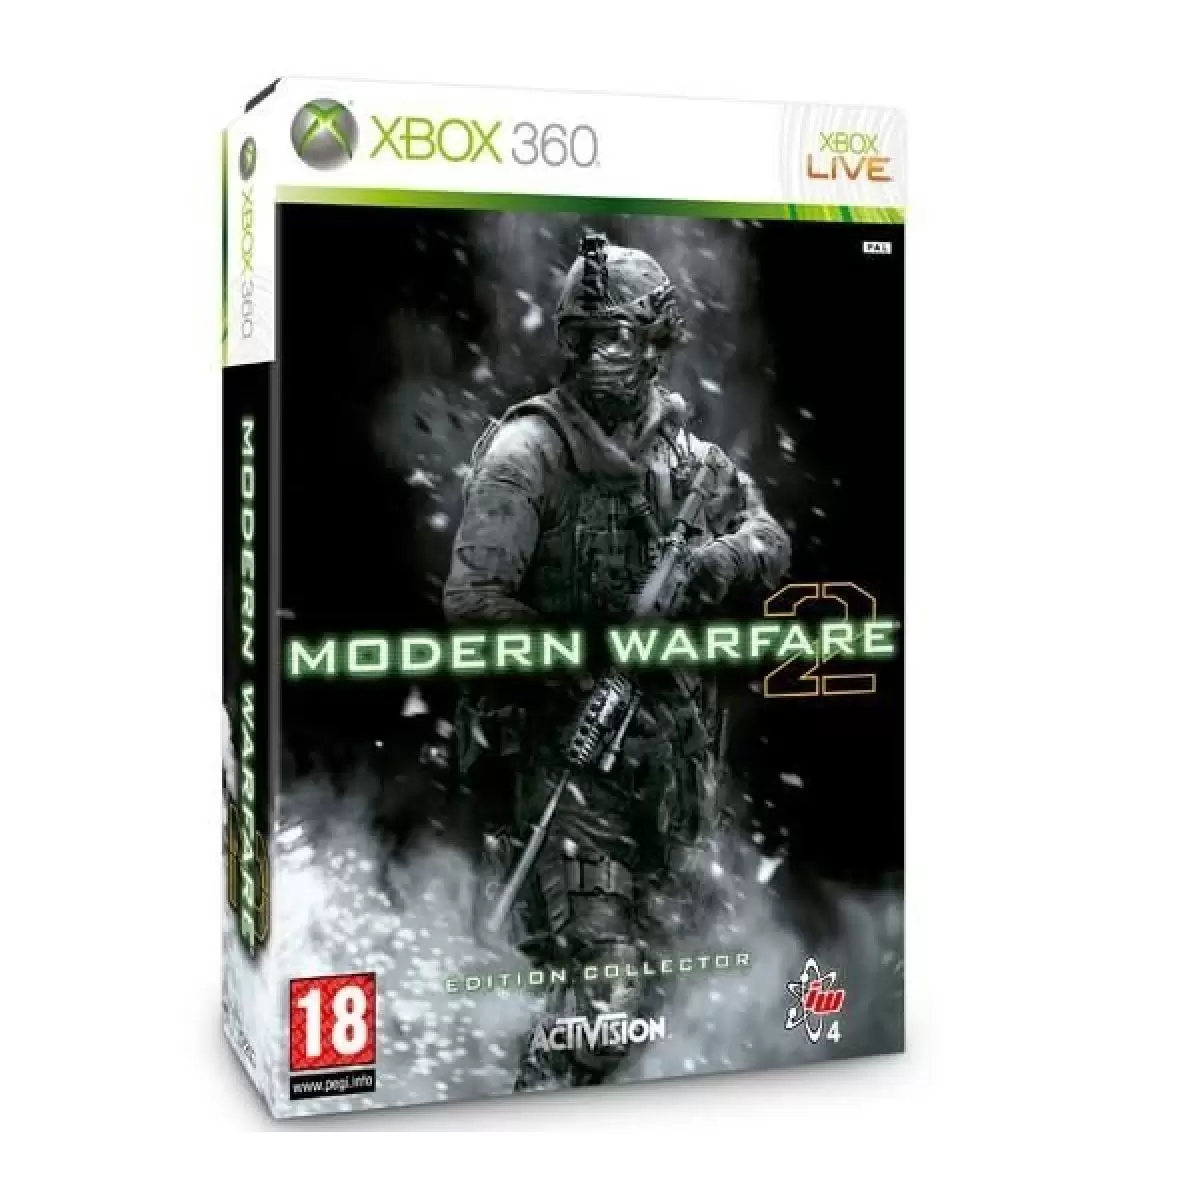 Jeux XBOX 360 - Modern Warfare 2 édition collector